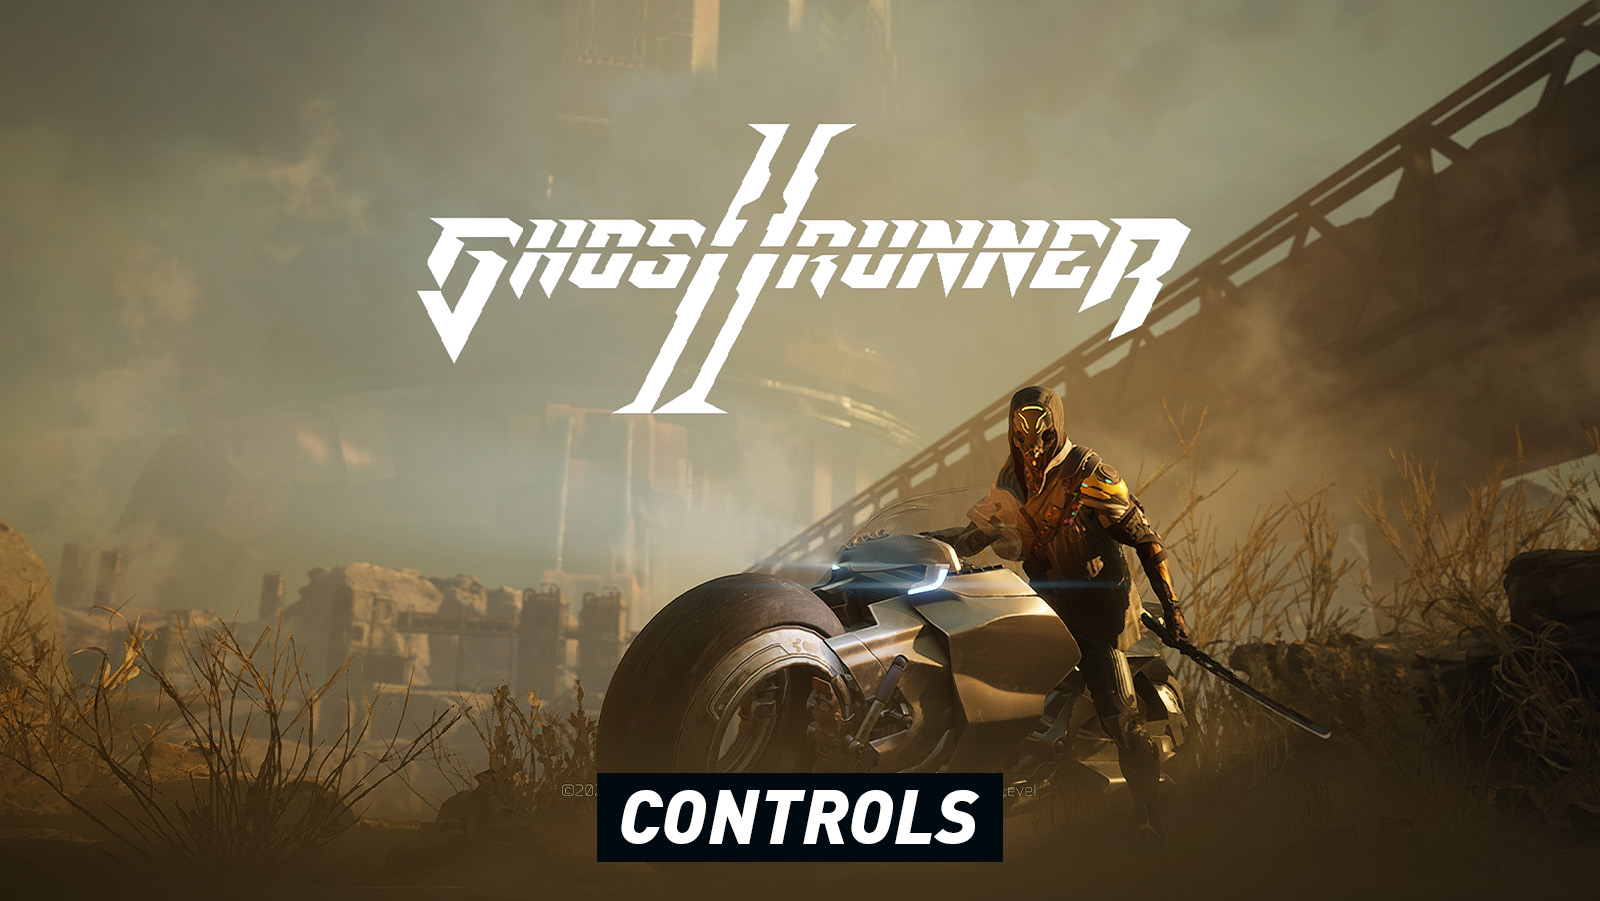 Ghostrunner 2 – Controls